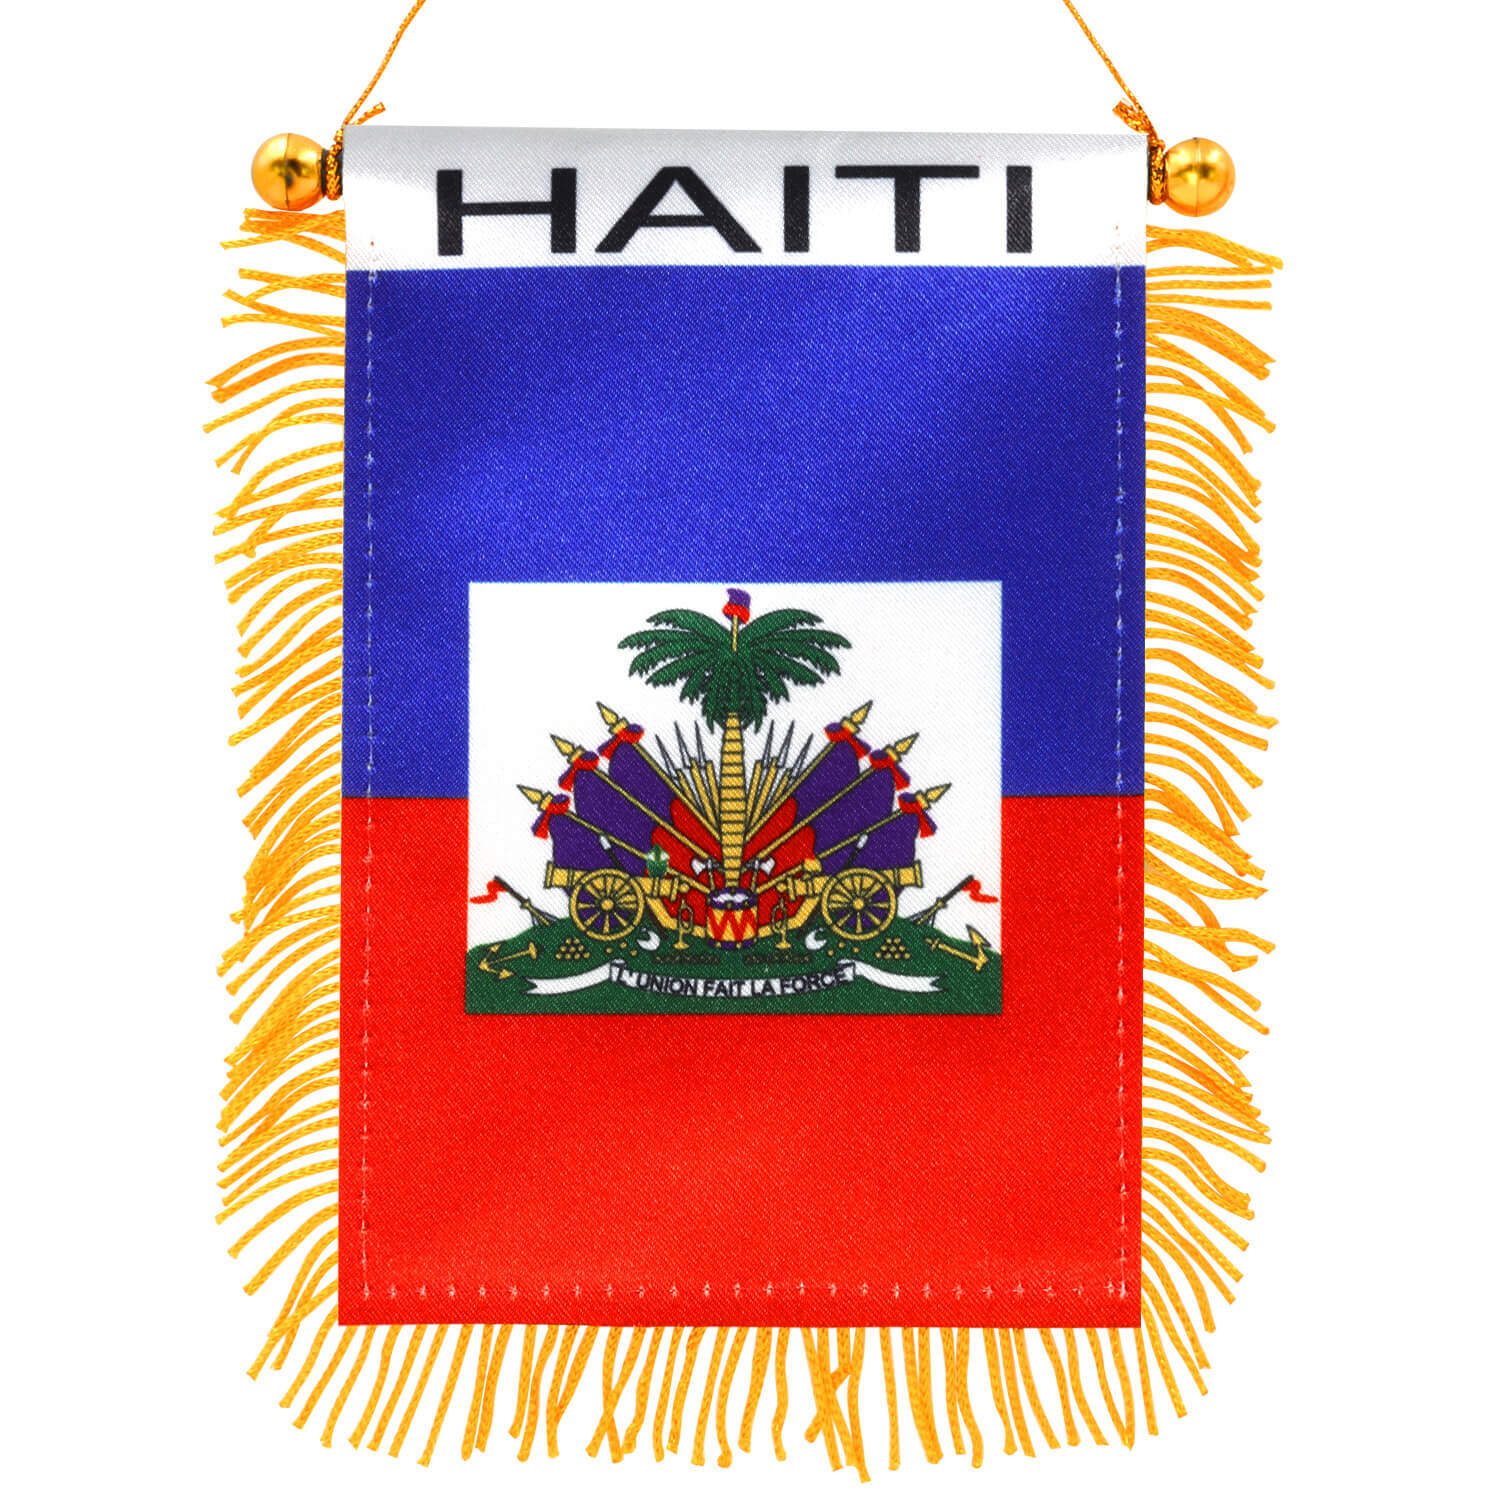 Rear view mirror car flags Haiti Hatian unity flagz for inside the car